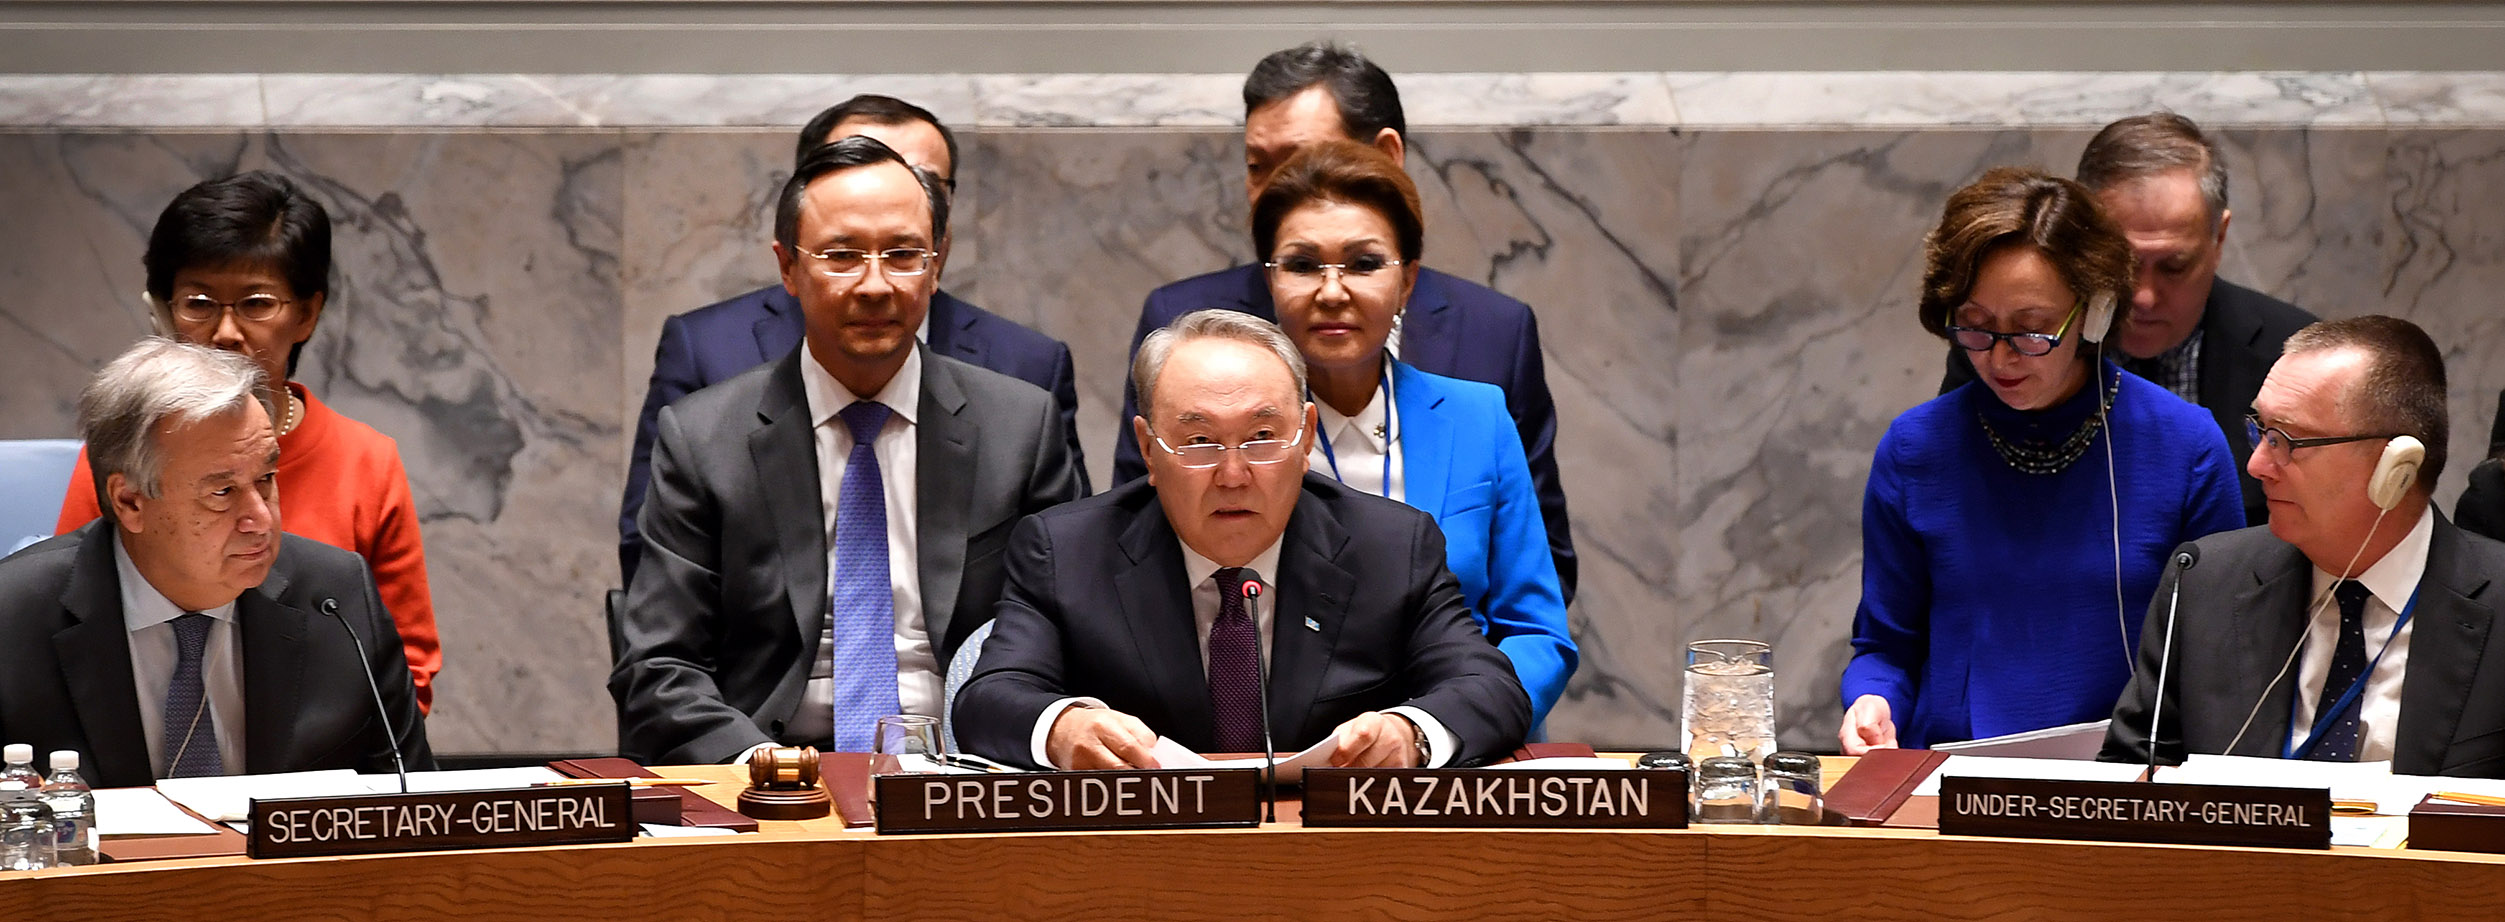  Kazakh President Nursultan Nazarbayev talks in the UN Security Council